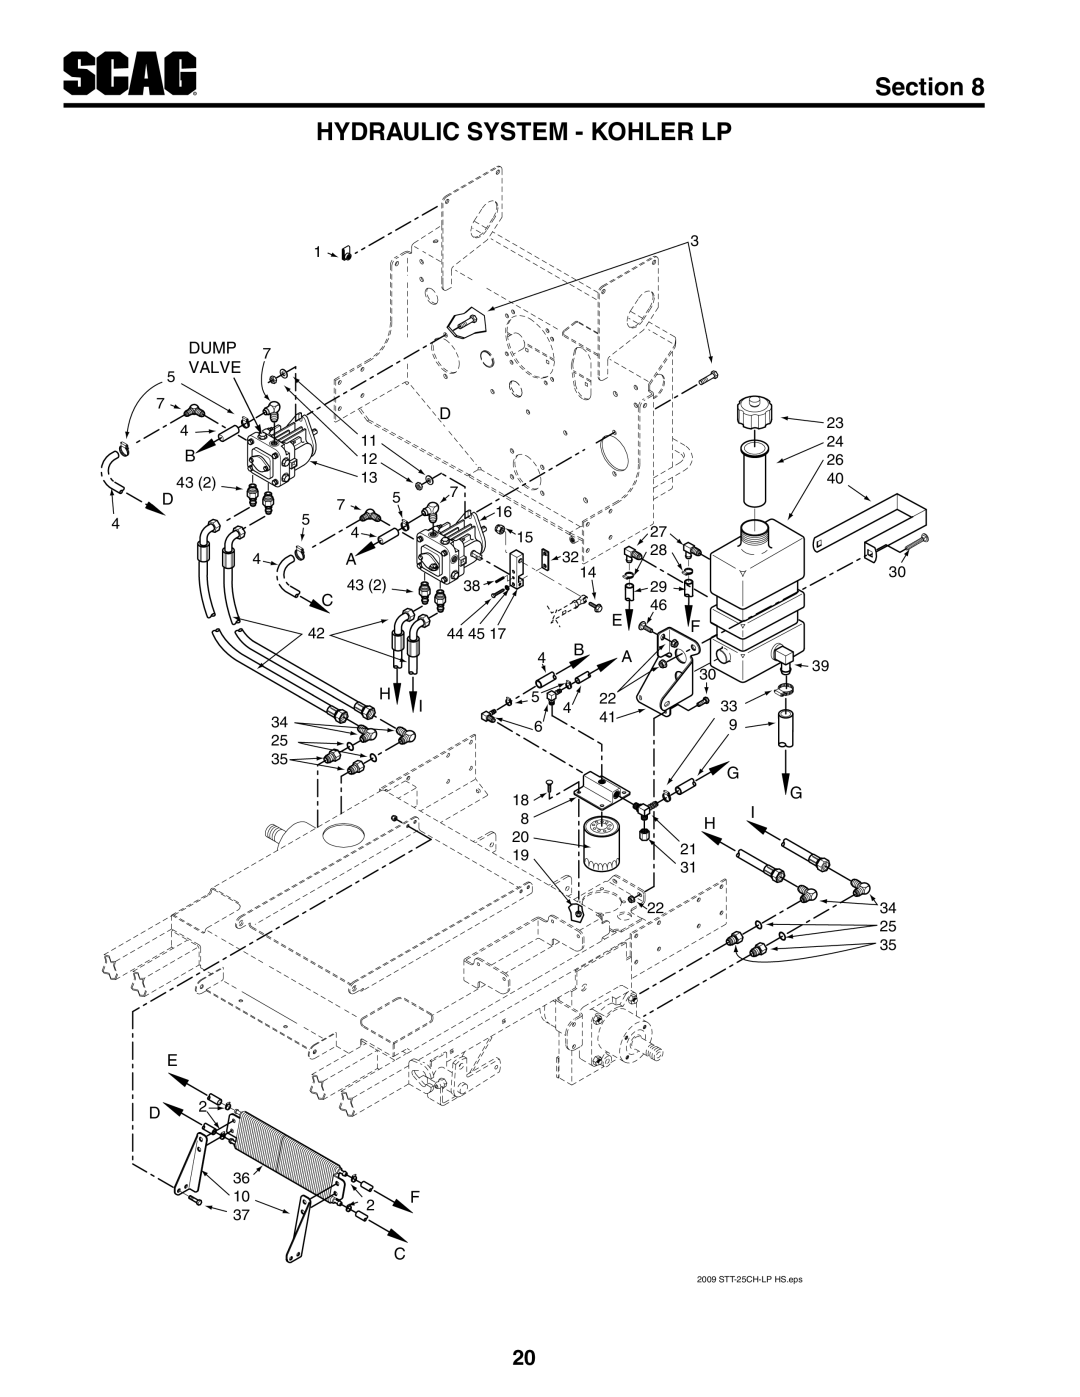 Scag Power Equipment STT-25CH-LP manual Hydraulic System - Kohler Lp, Section 